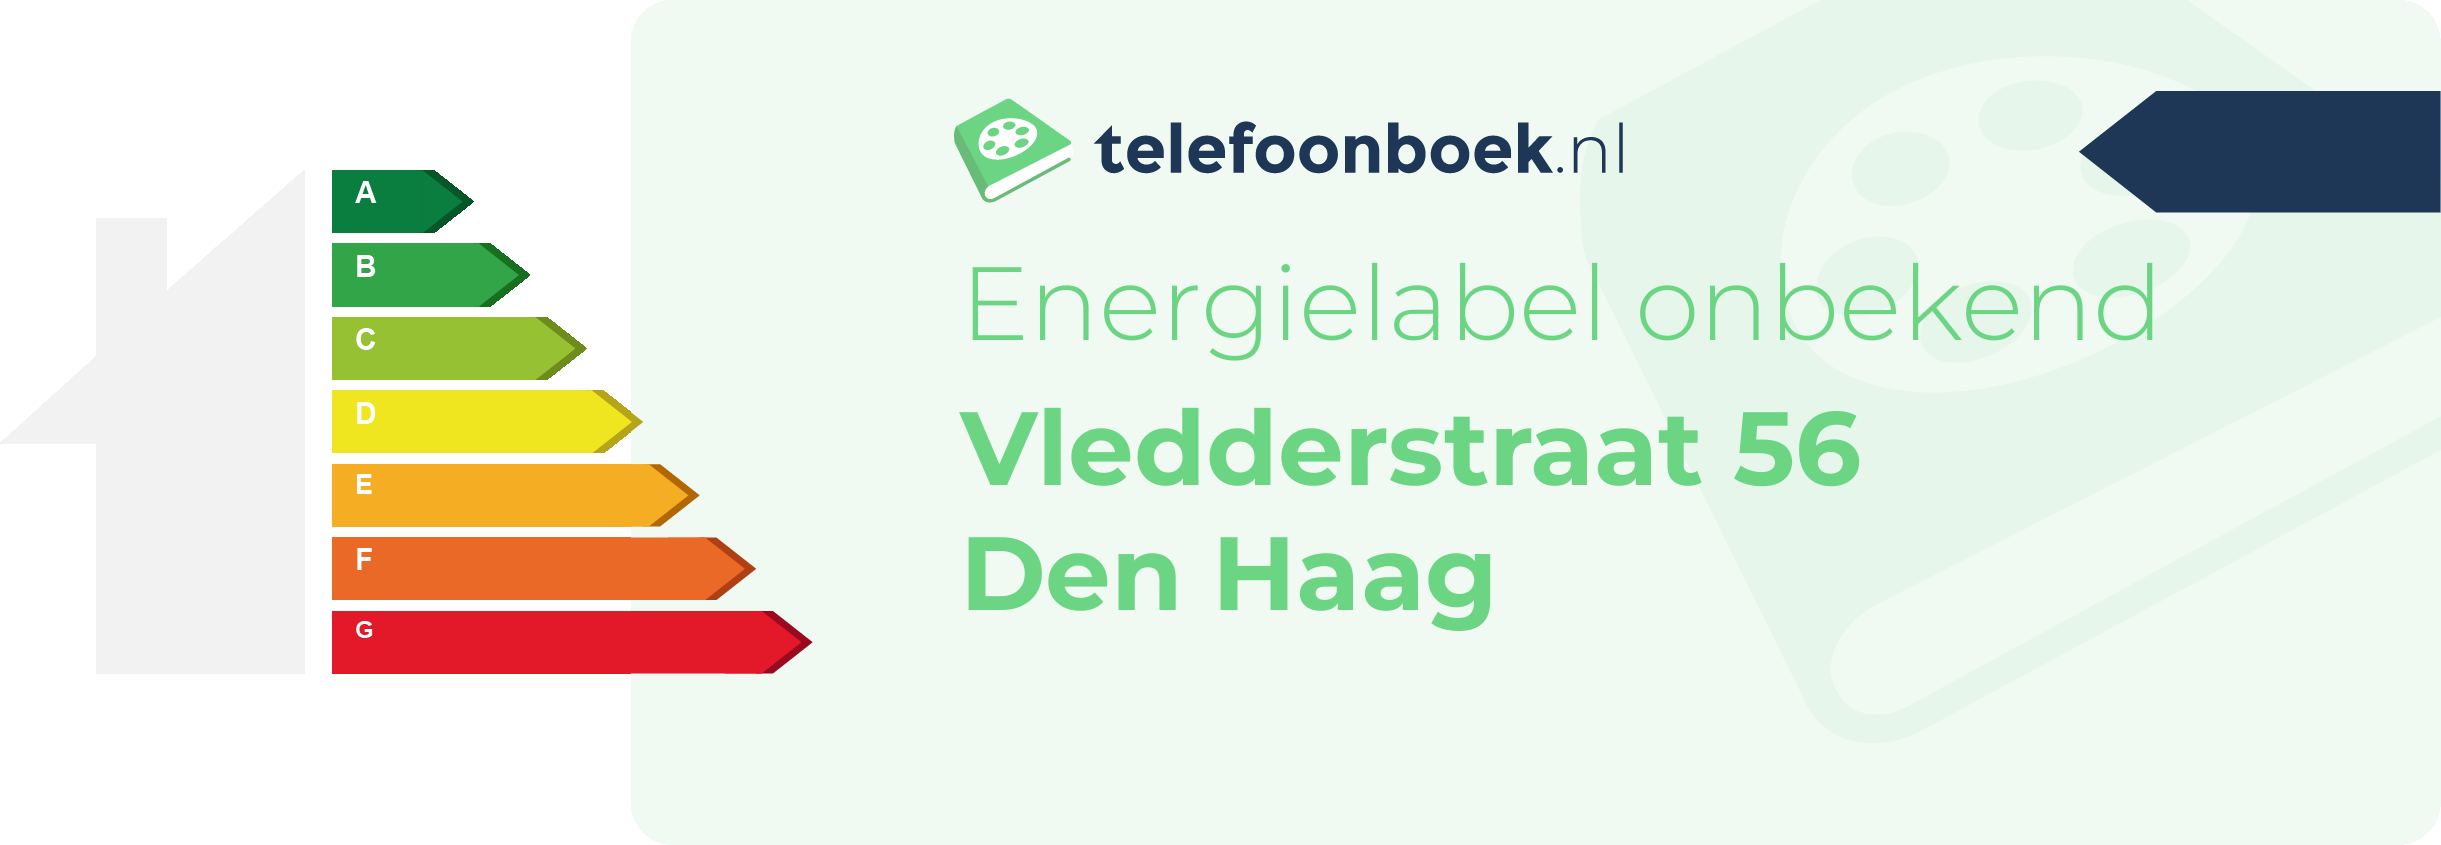 Energielabel Vledderstraat 56 Den Haag